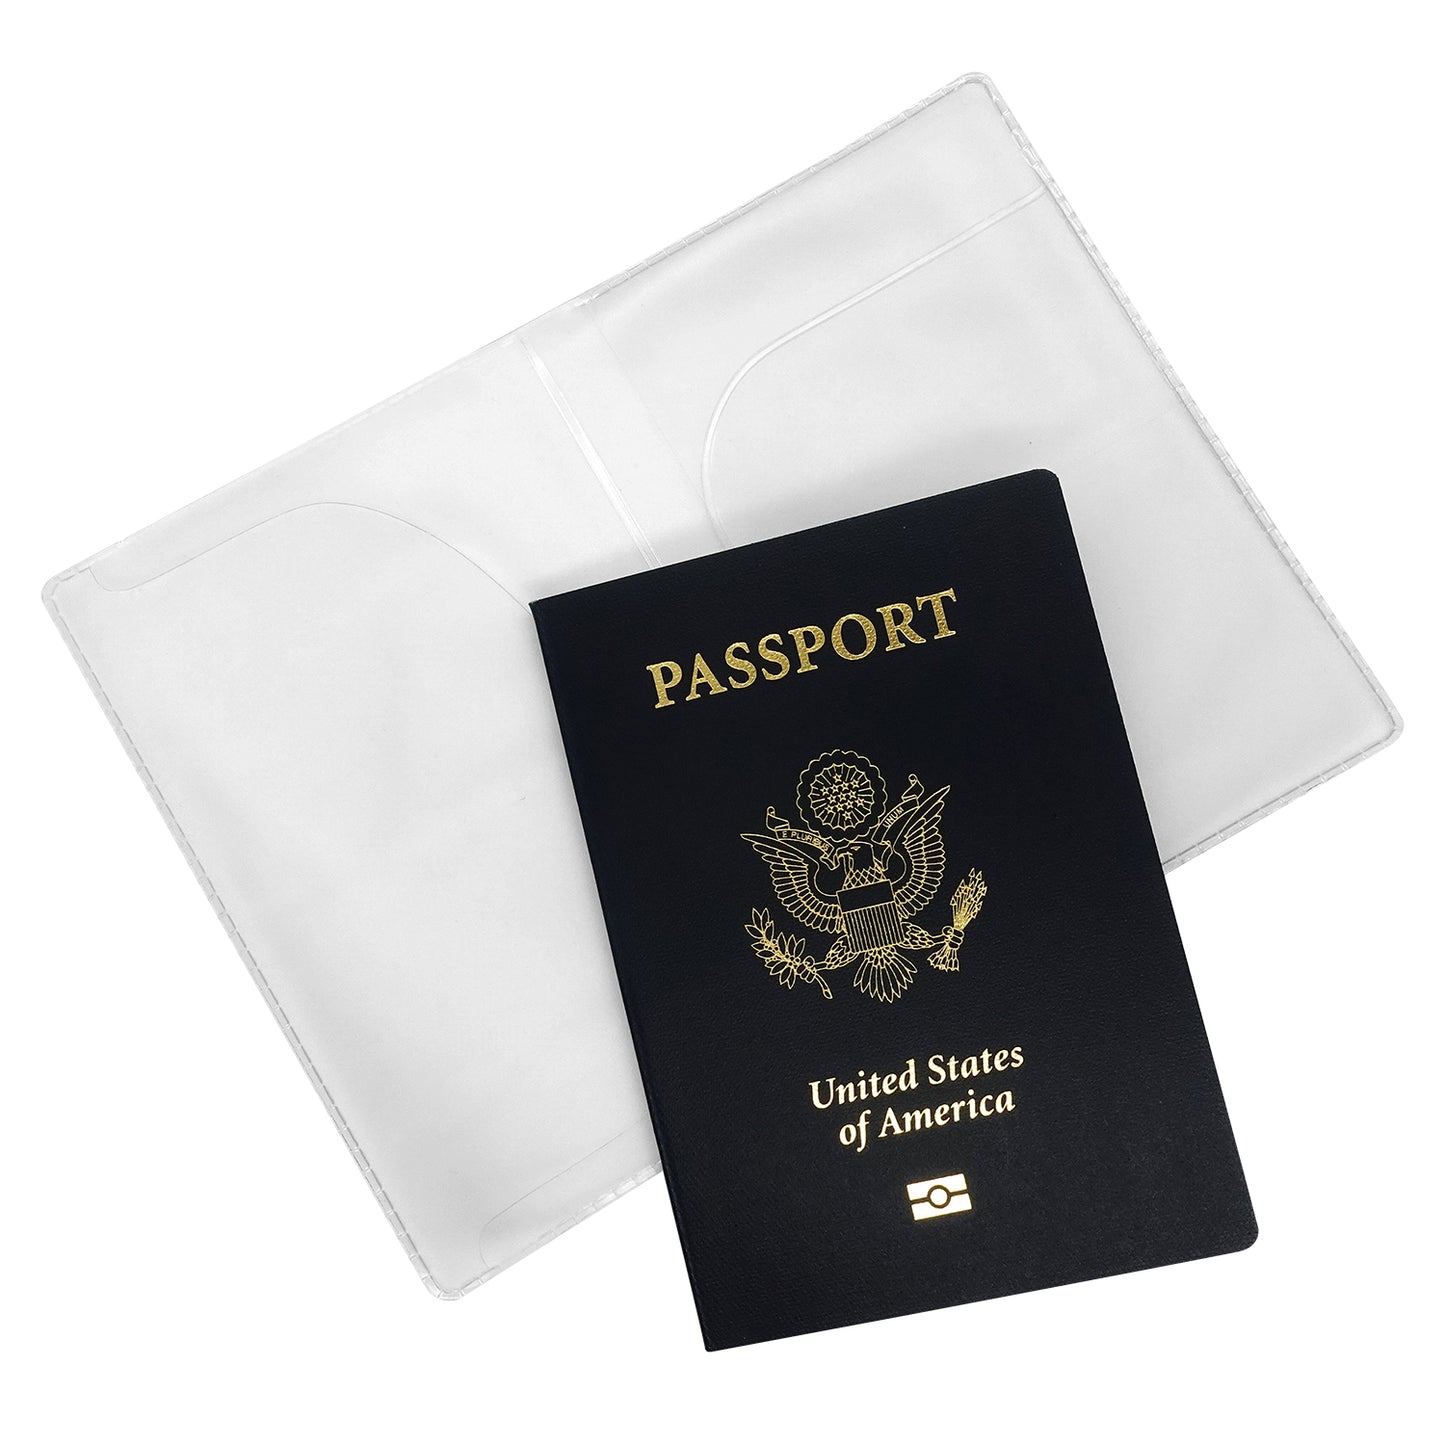 Frosted Passport Cover Vinyl Plastic Passport Protector